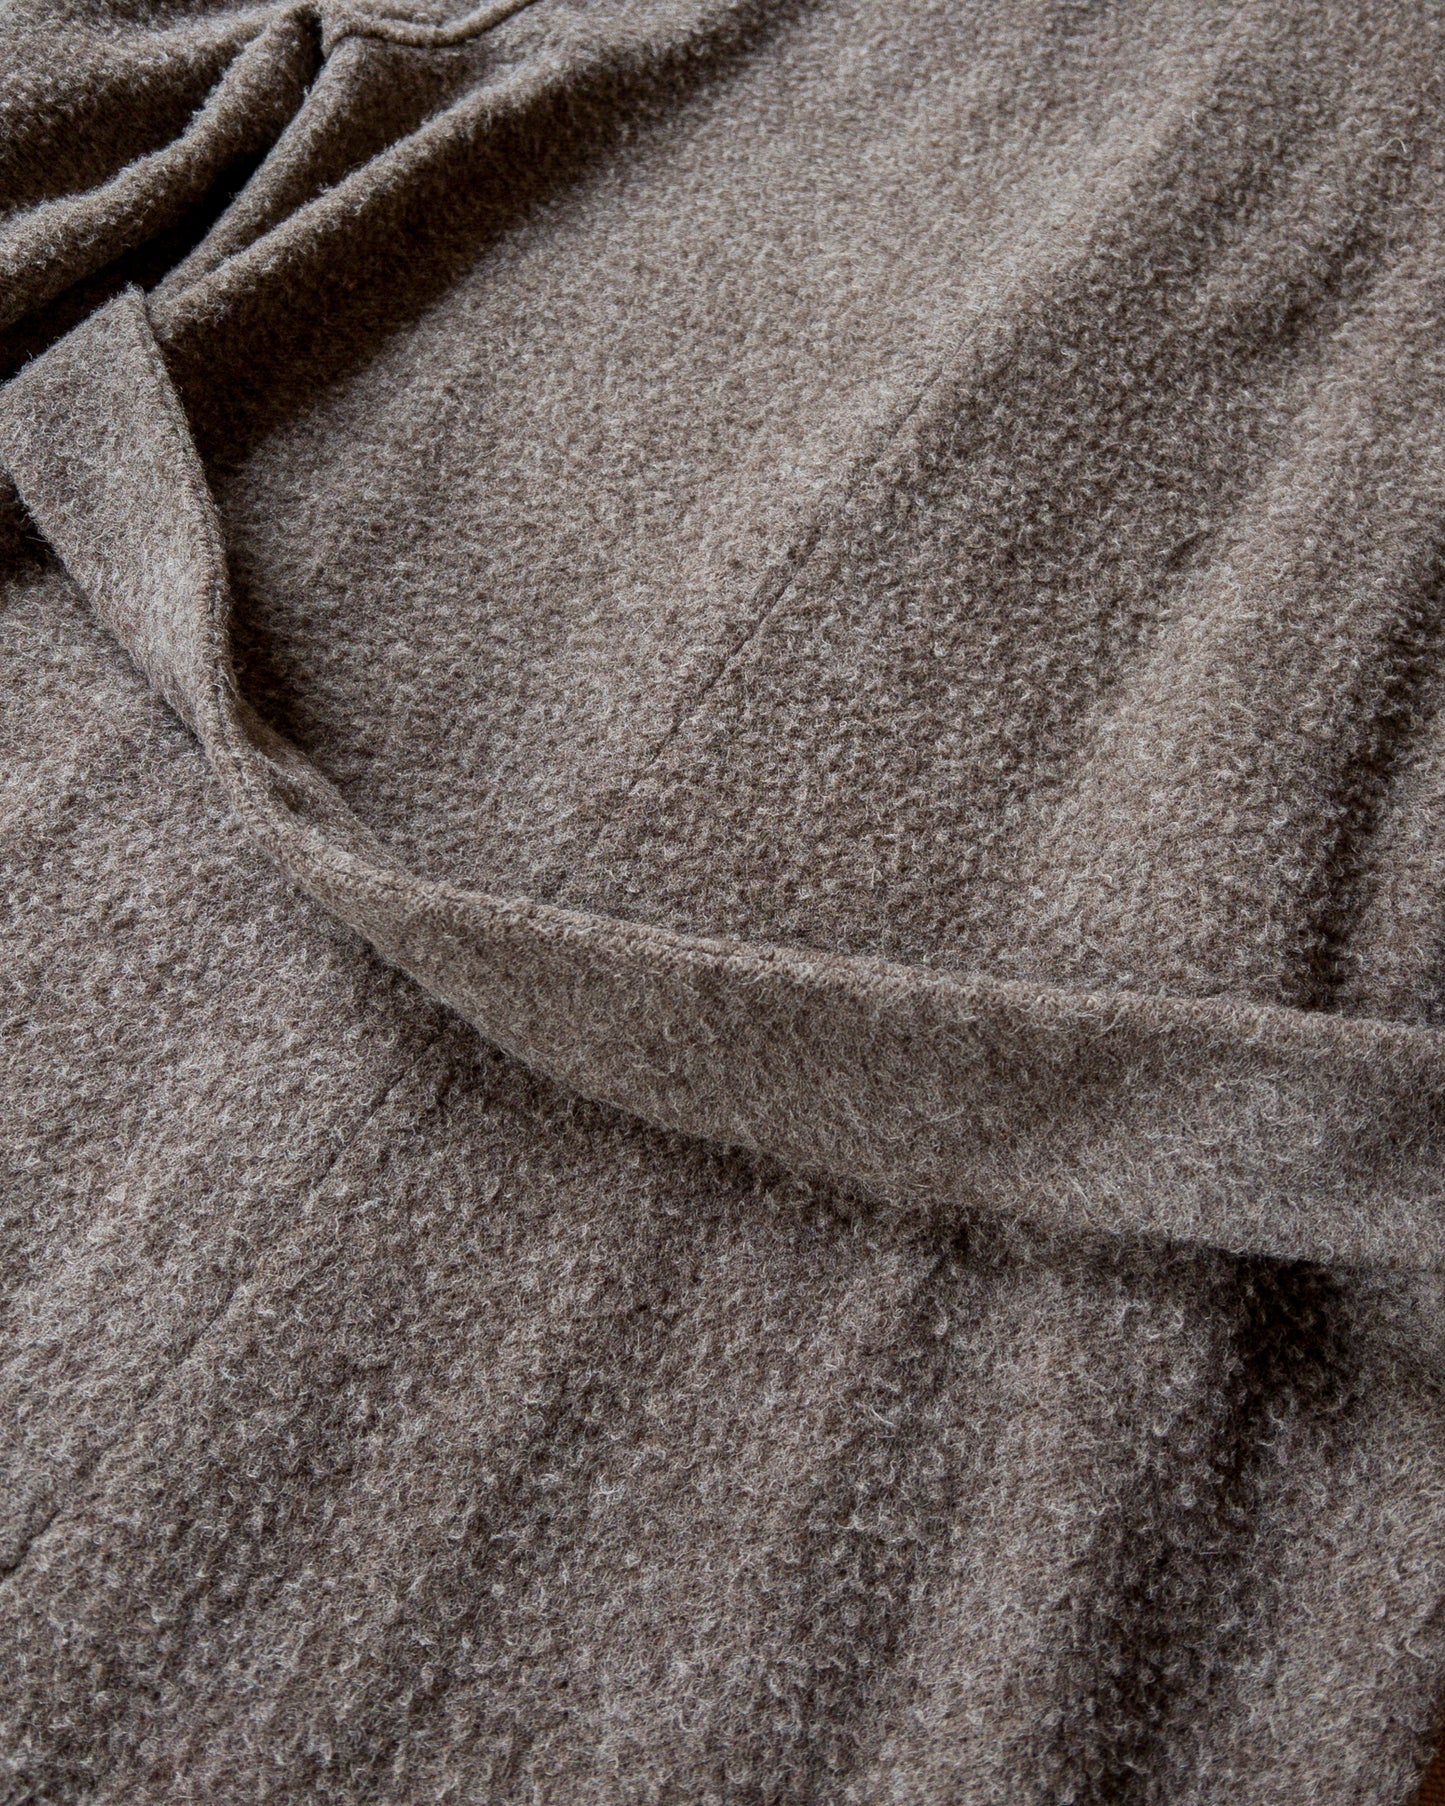 Shawl Collar Wool Overcoat - Brown/Cream Twill Casentino